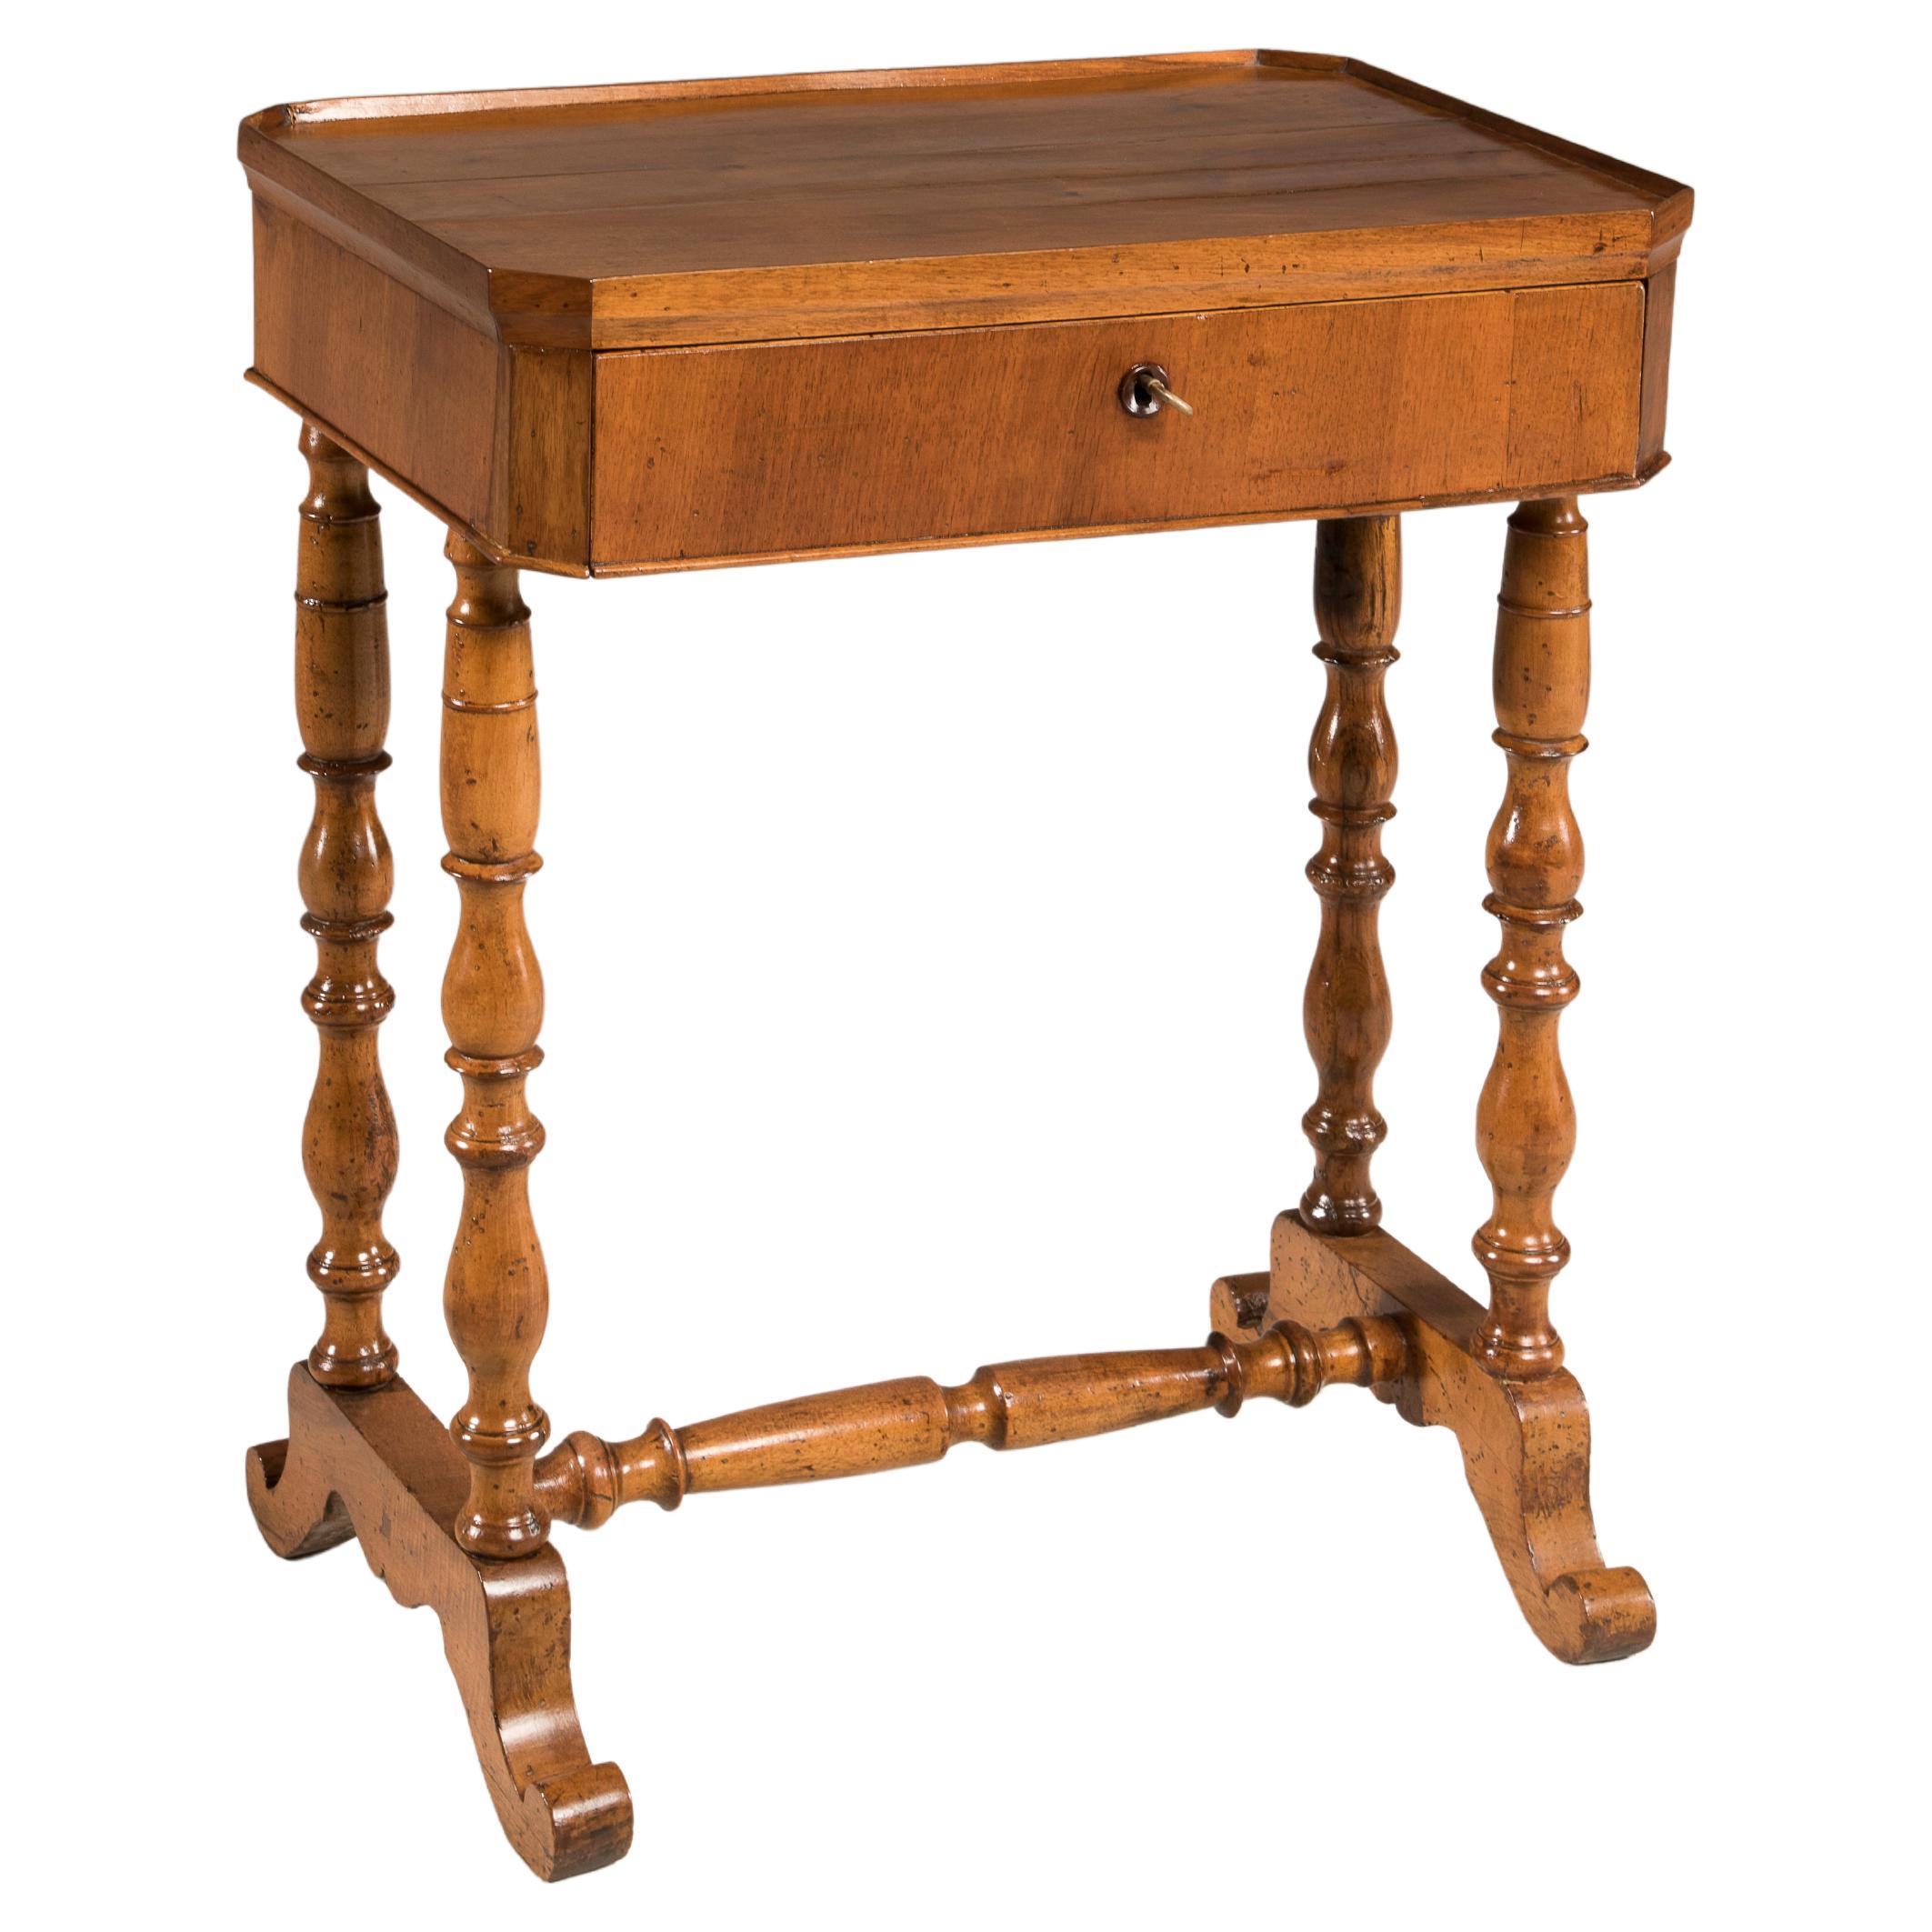 Mid-19th Century, Rectangular Walnut Working Little Table